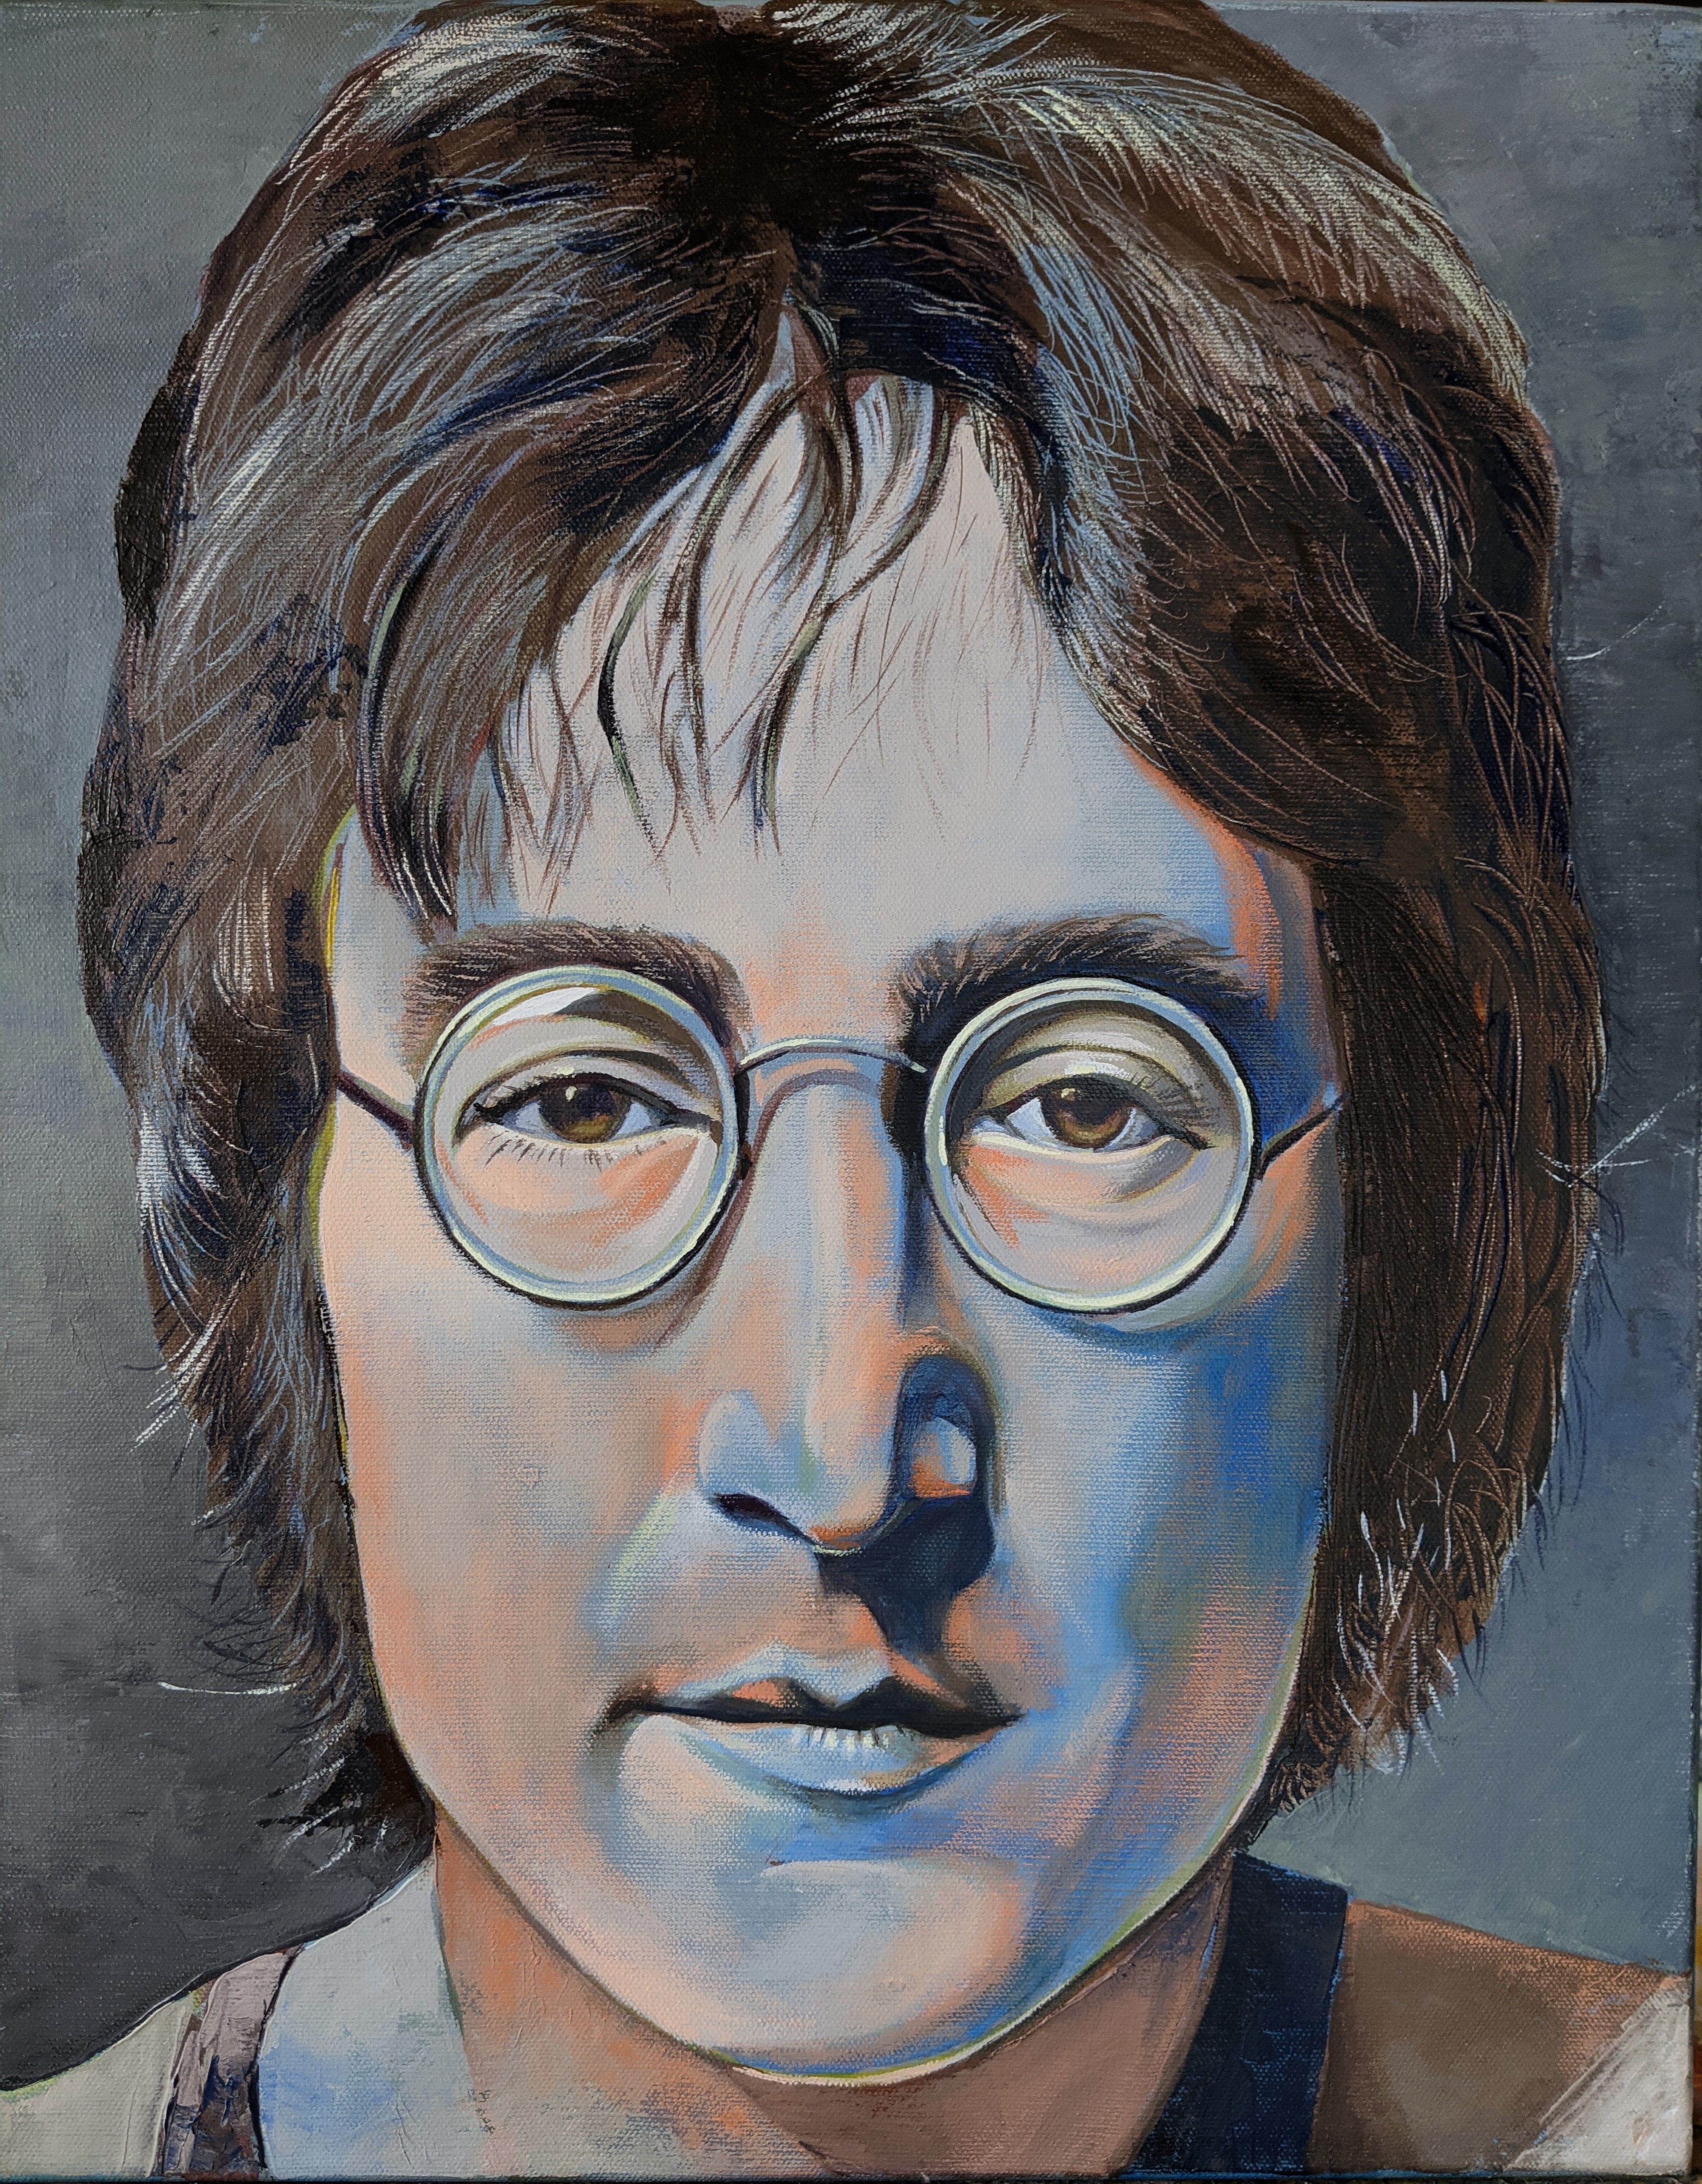 John Lennon
Acrylics on canvas 
40*50